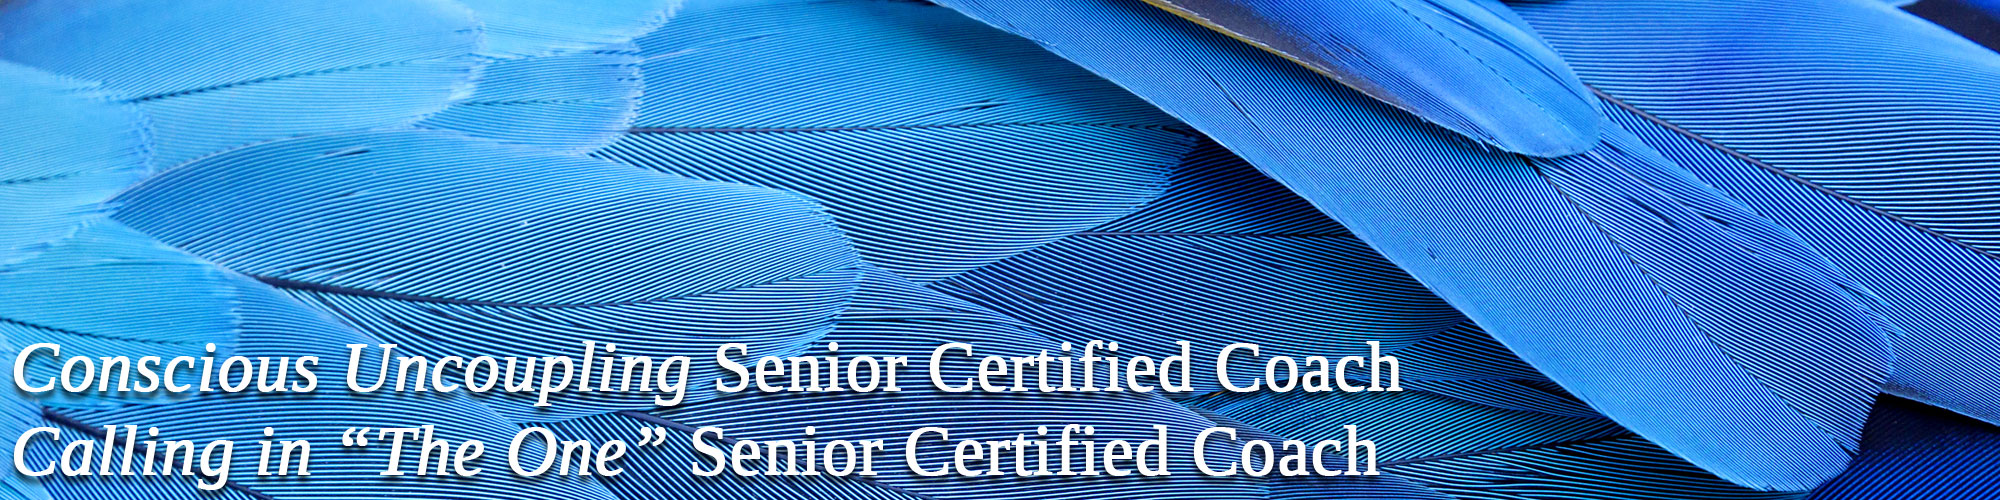 Conscious Uncoupling Senior Certified Coach - Calling in The One Senior Certified Coach